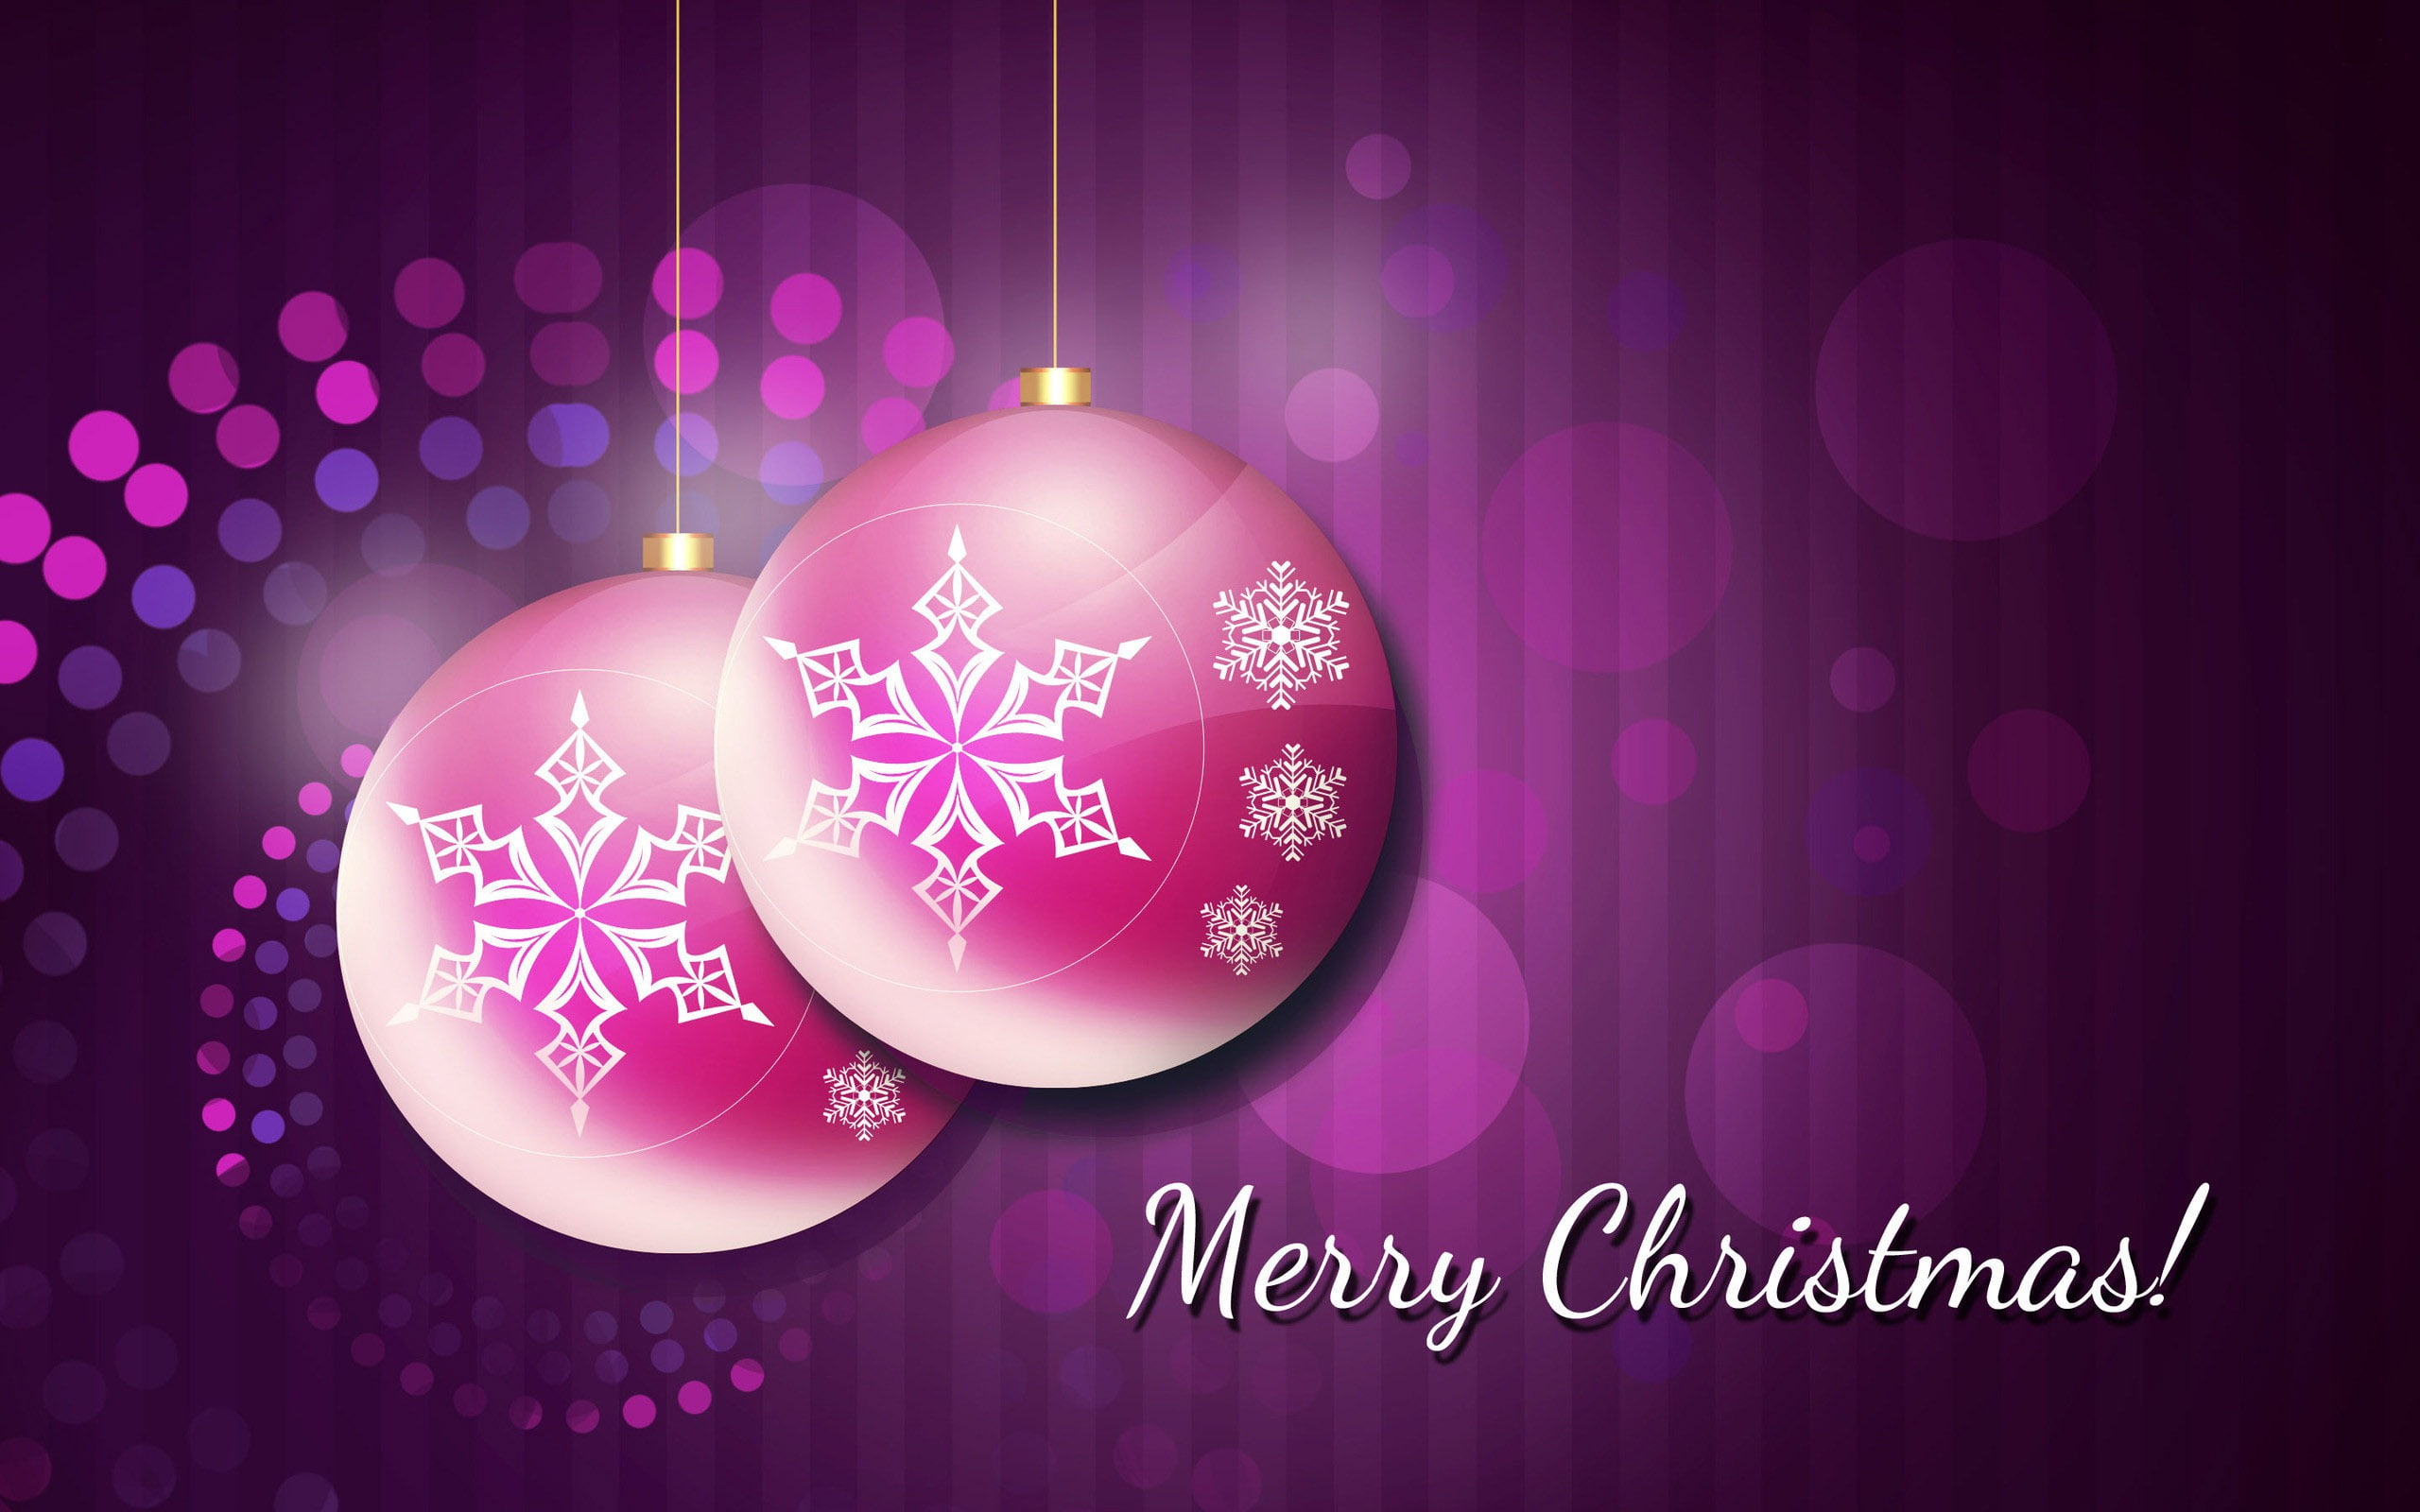 Merry Christmas 2014-Holiday desktop wallpapers, celebration